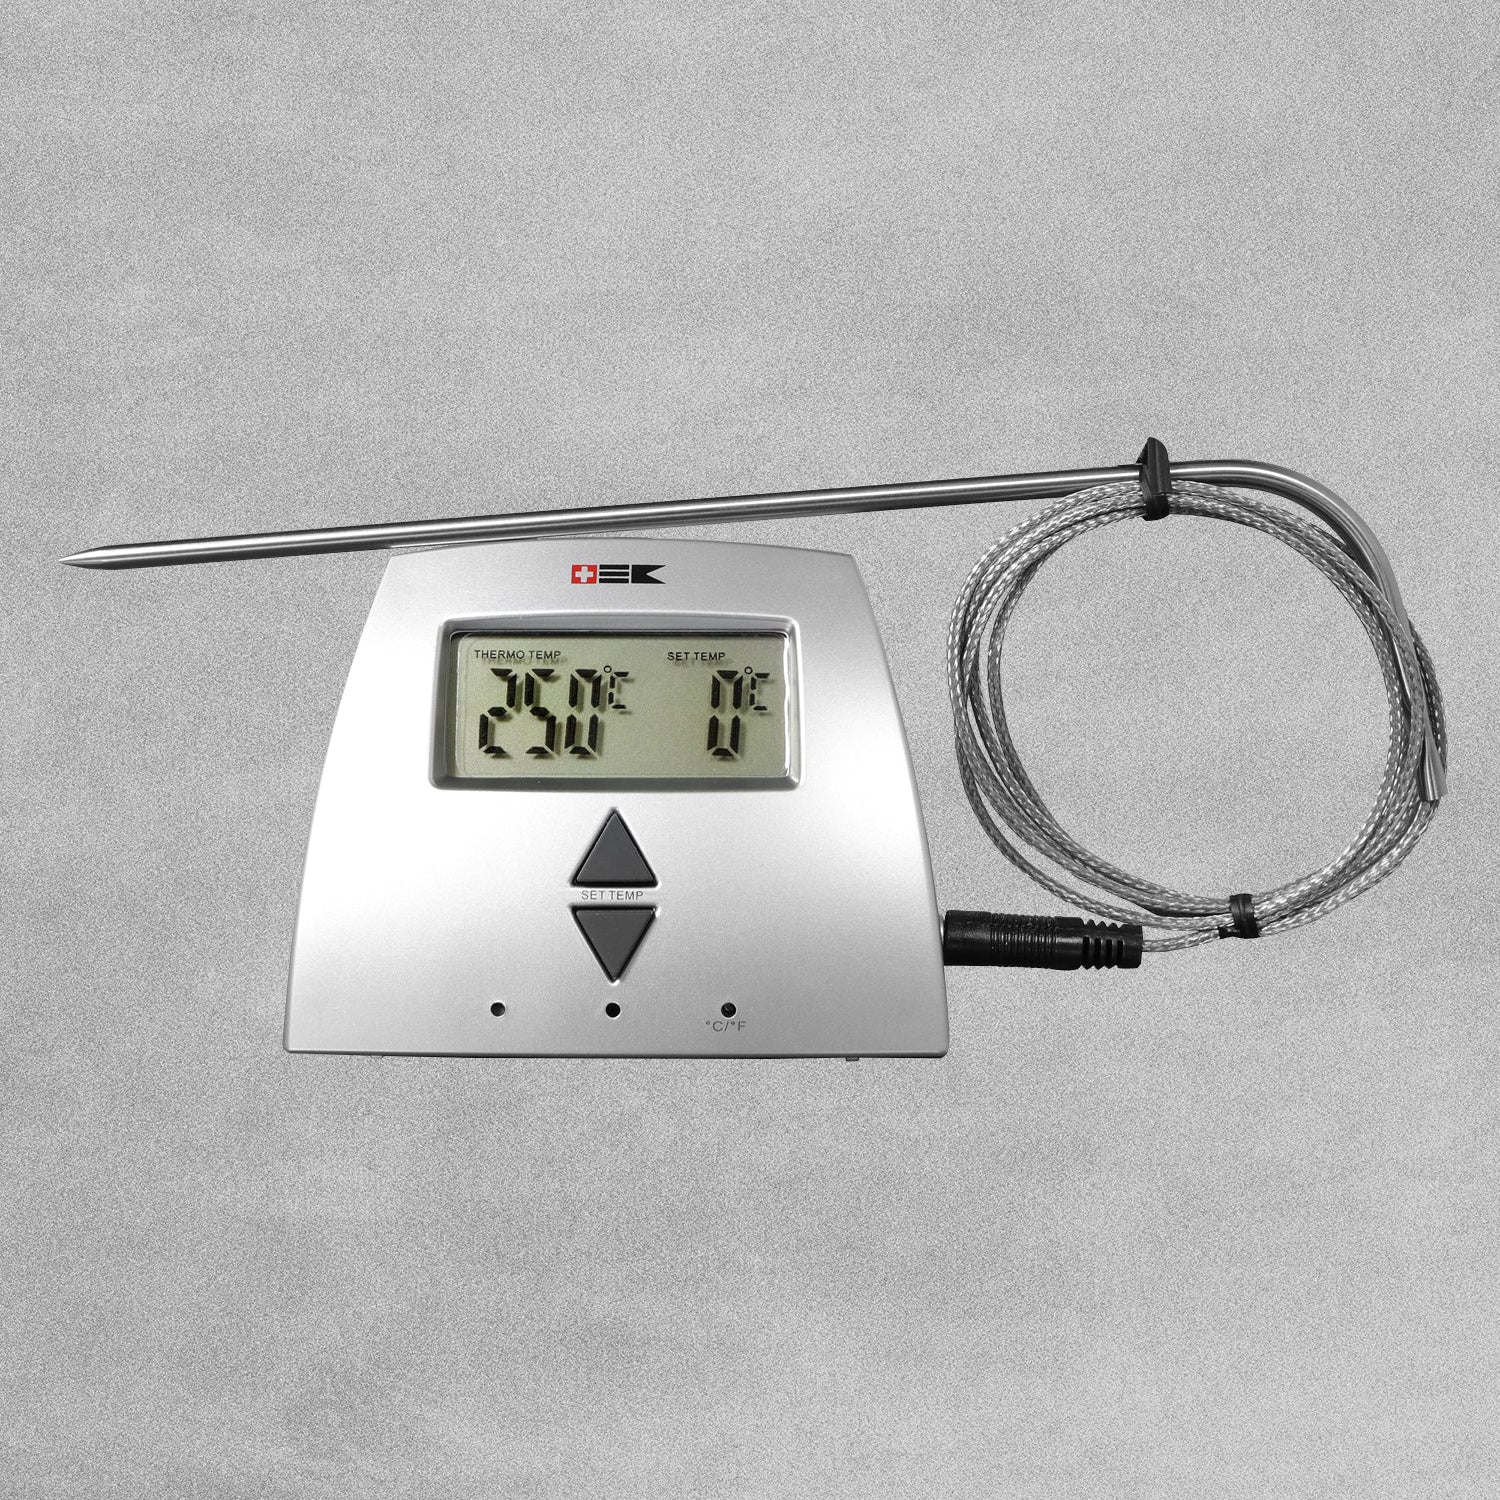 Bengt Ek Design Swiss Digital Meat Temperature Cooking Thermometer - 0°C- 250°C